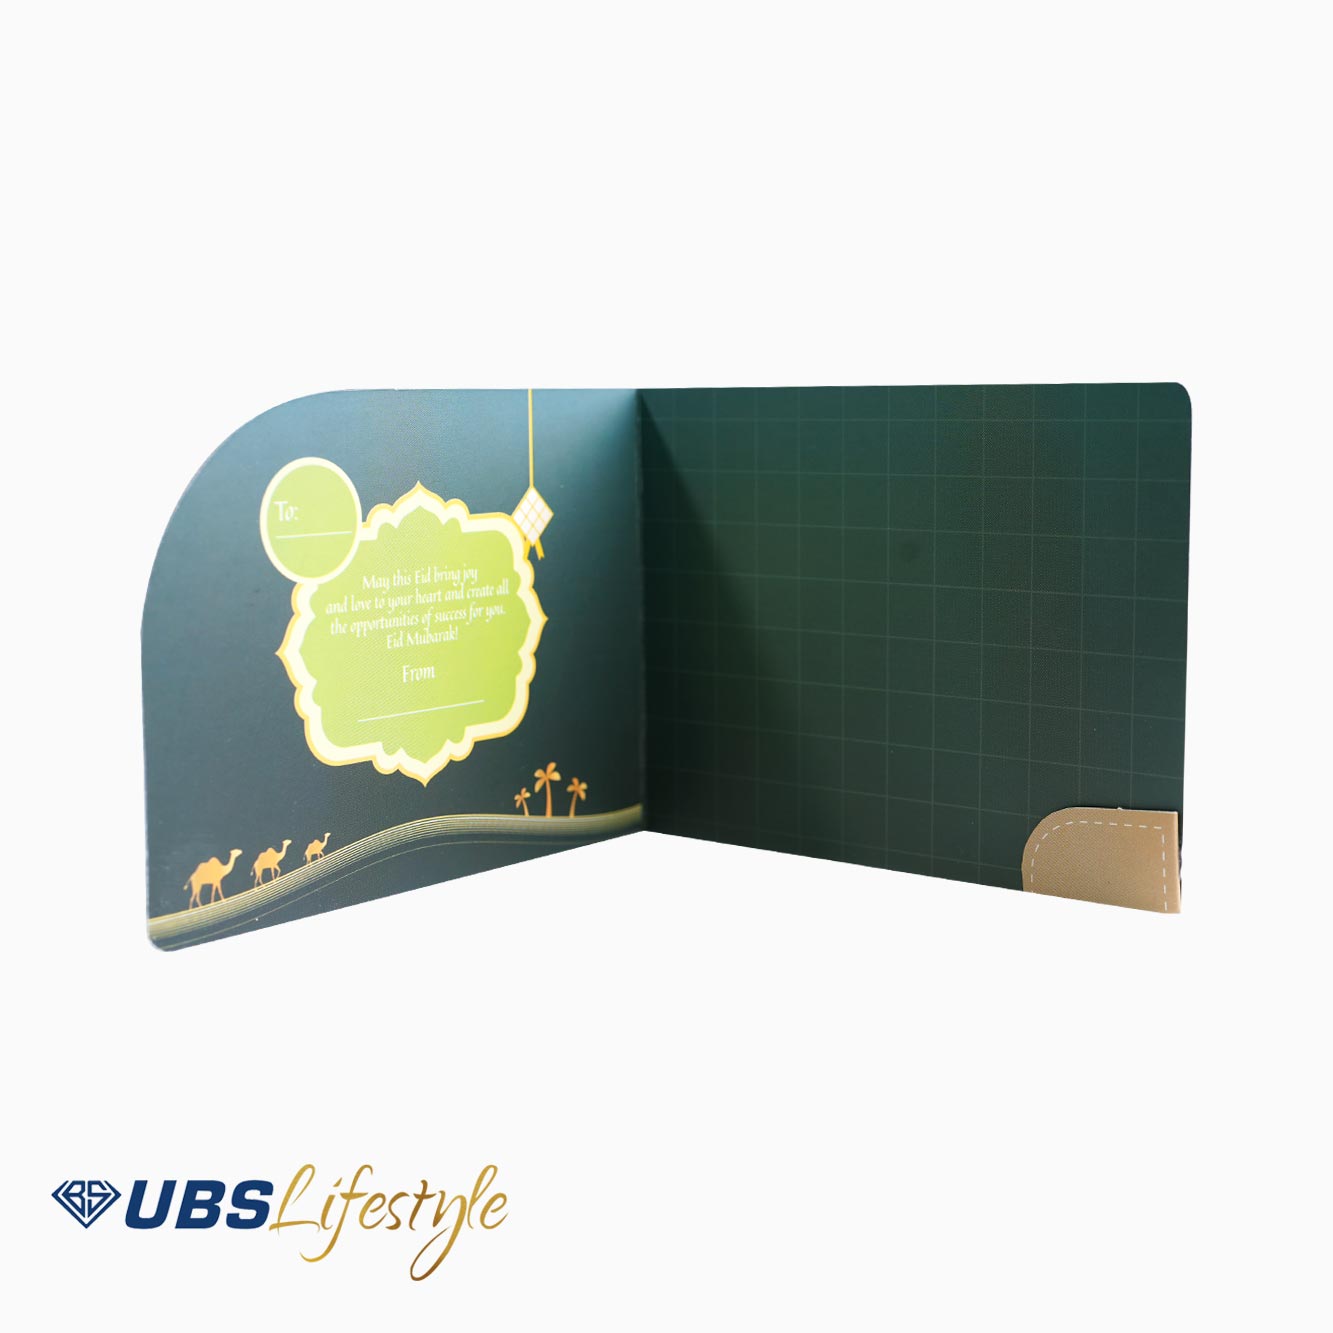 Kartu Ucapan UBS Lifestyle Edisi Idul Fitri - Yakkka0523